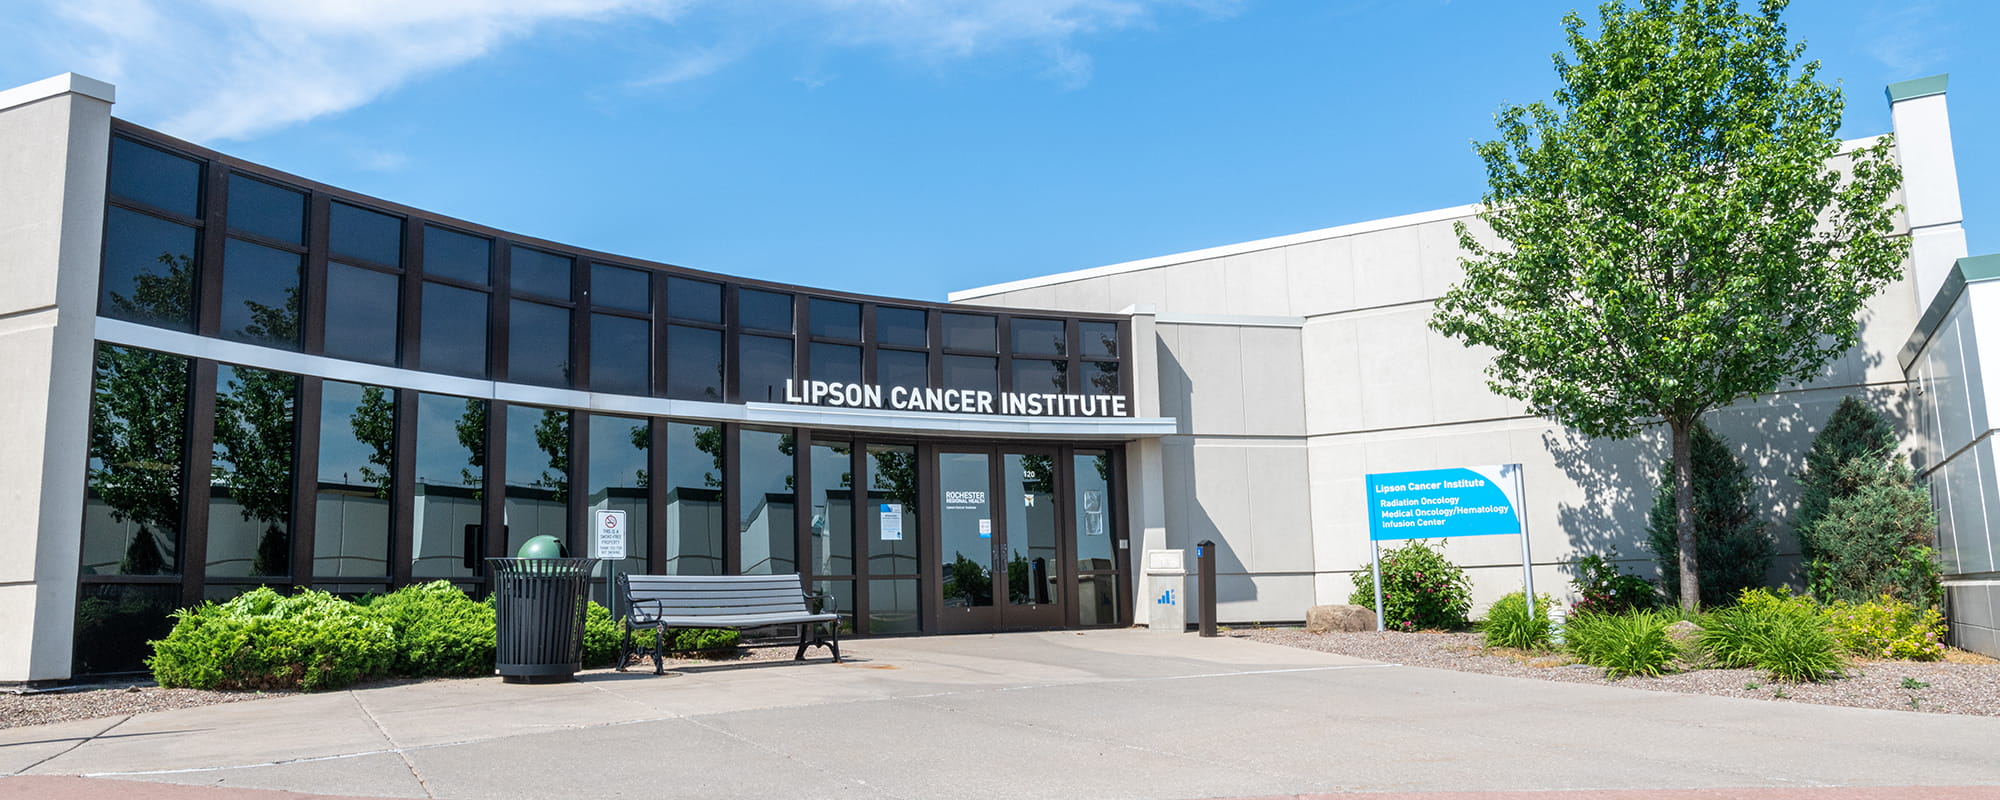 Lipson Cancer Institute - Unity Hospital